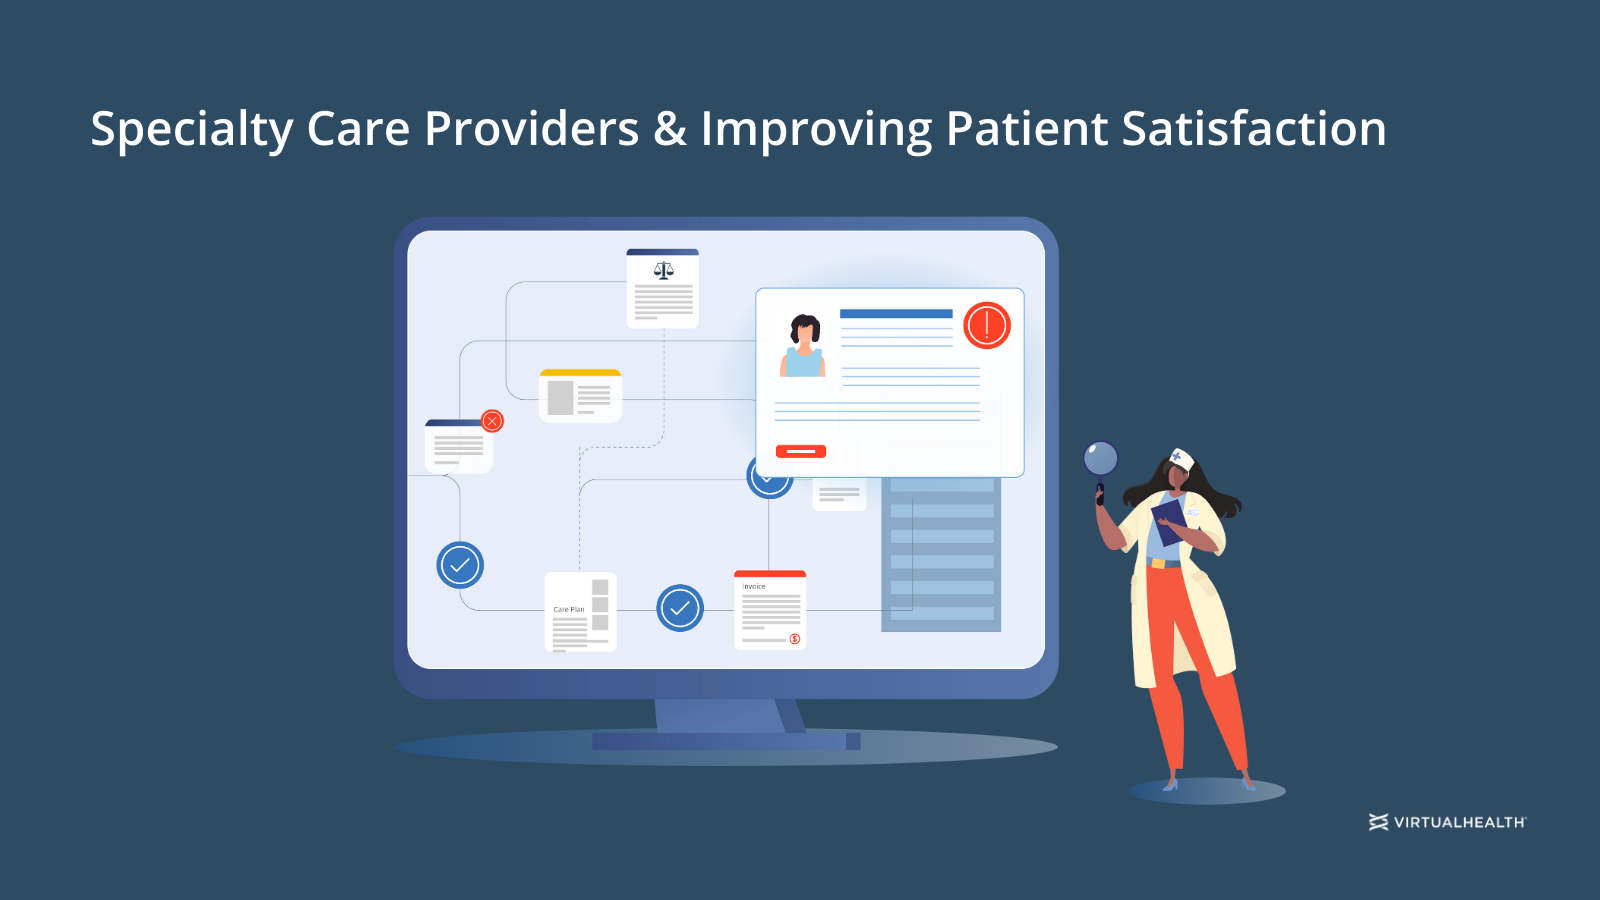 improving patient satisfaction blog post image